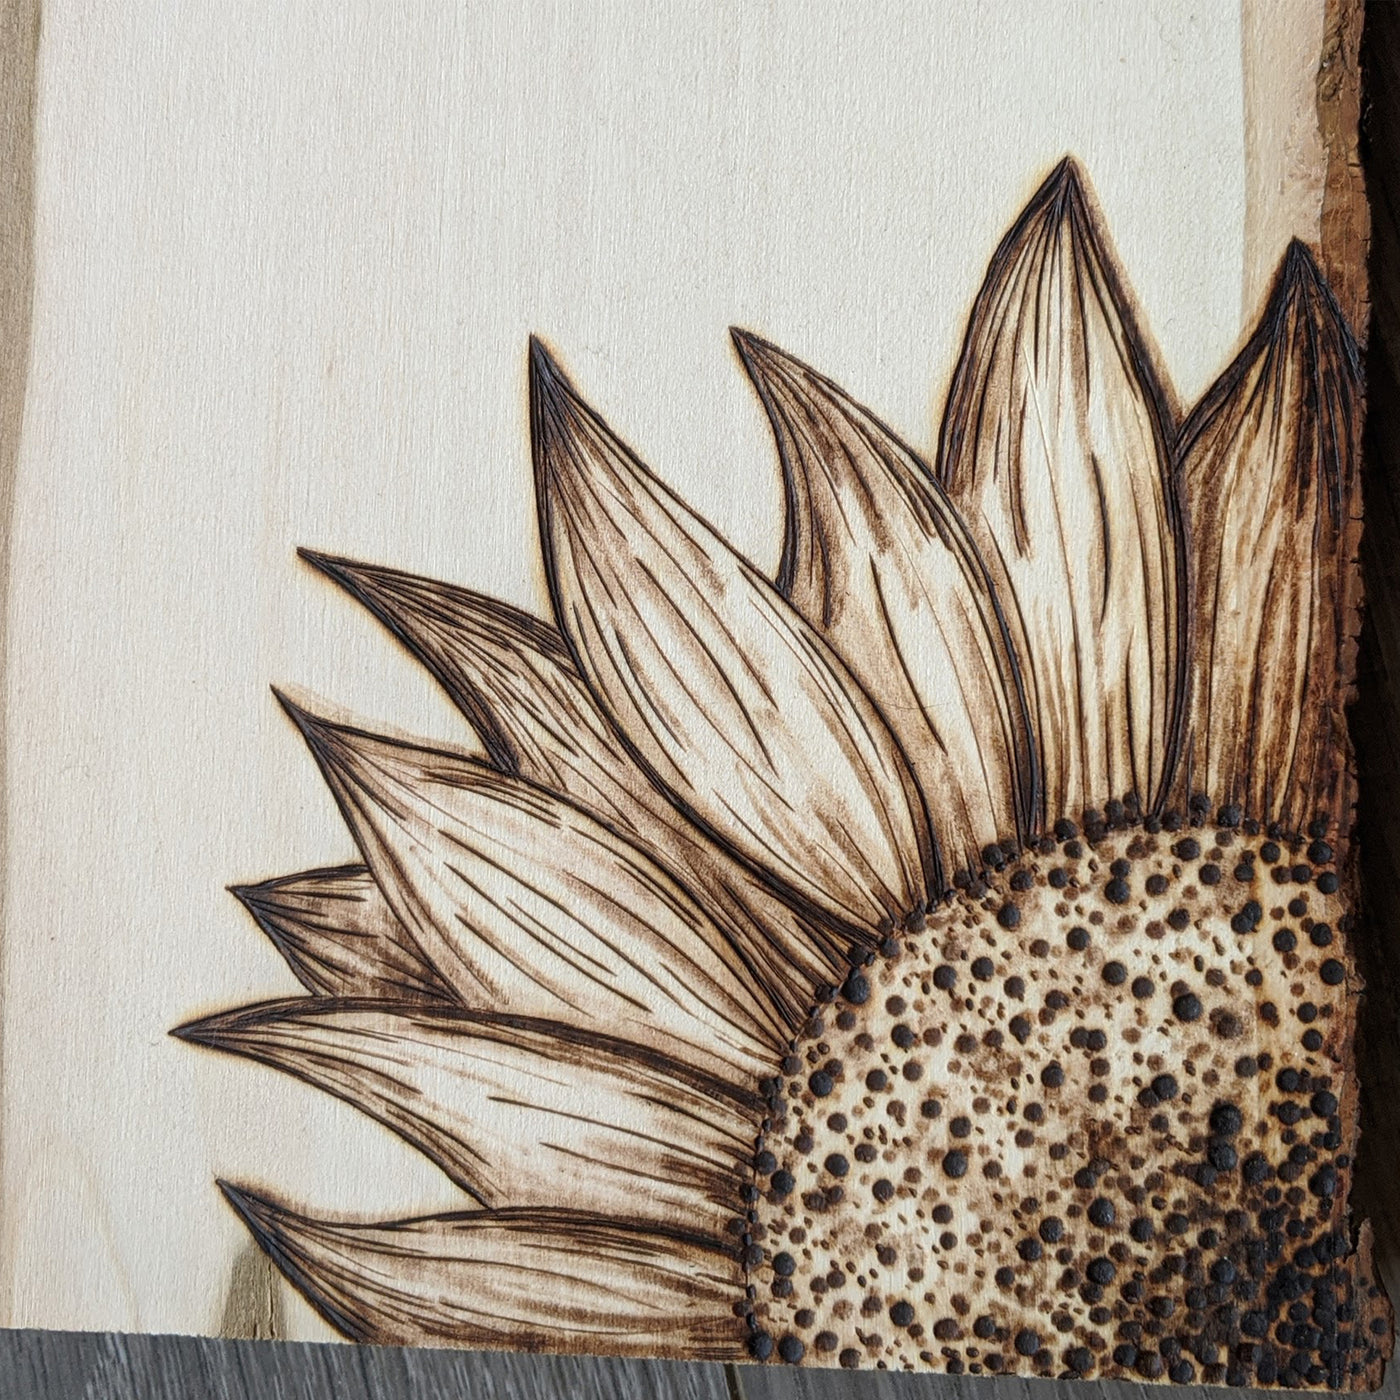 Sunflower Wood Sign